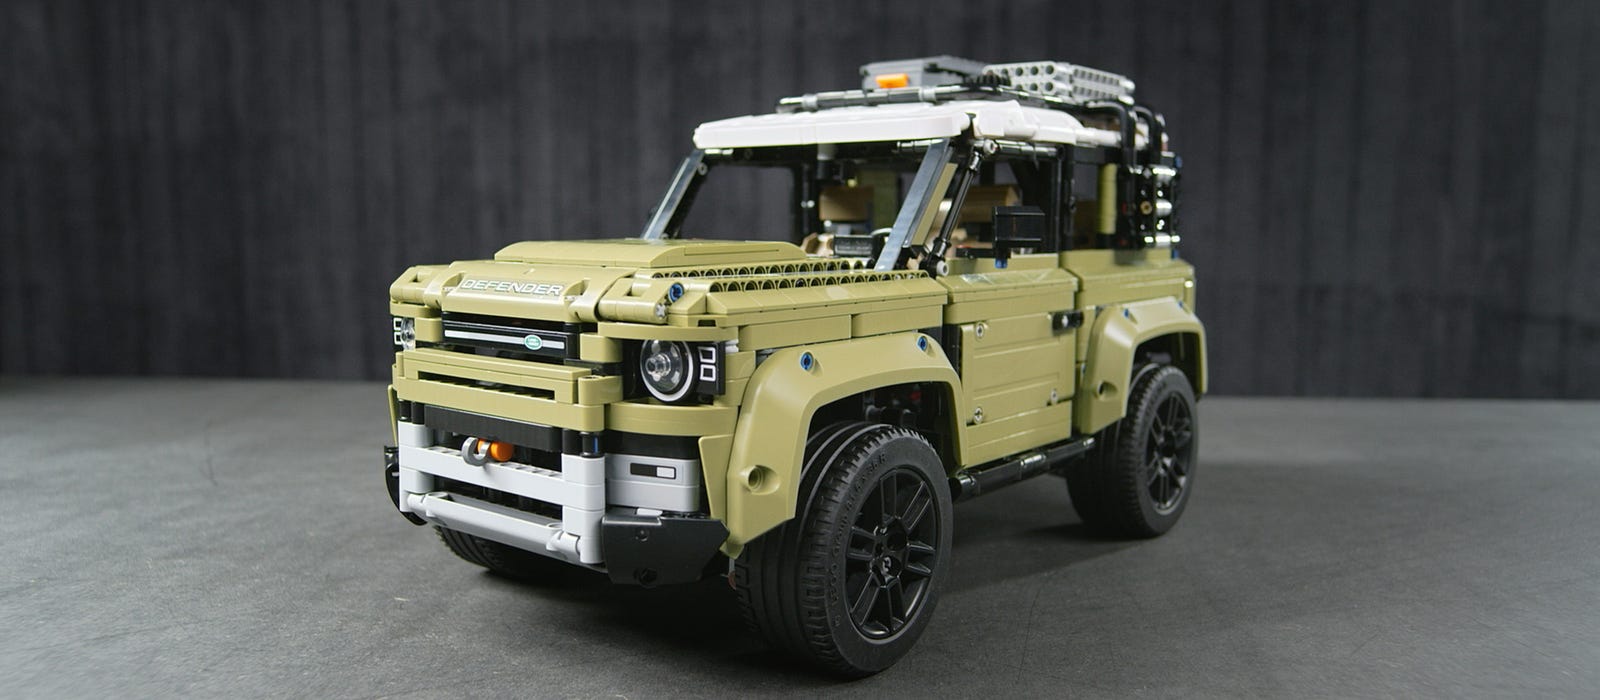 LEGO Land Rover Defender Half-Track Conversion Is Epic - autoevolution